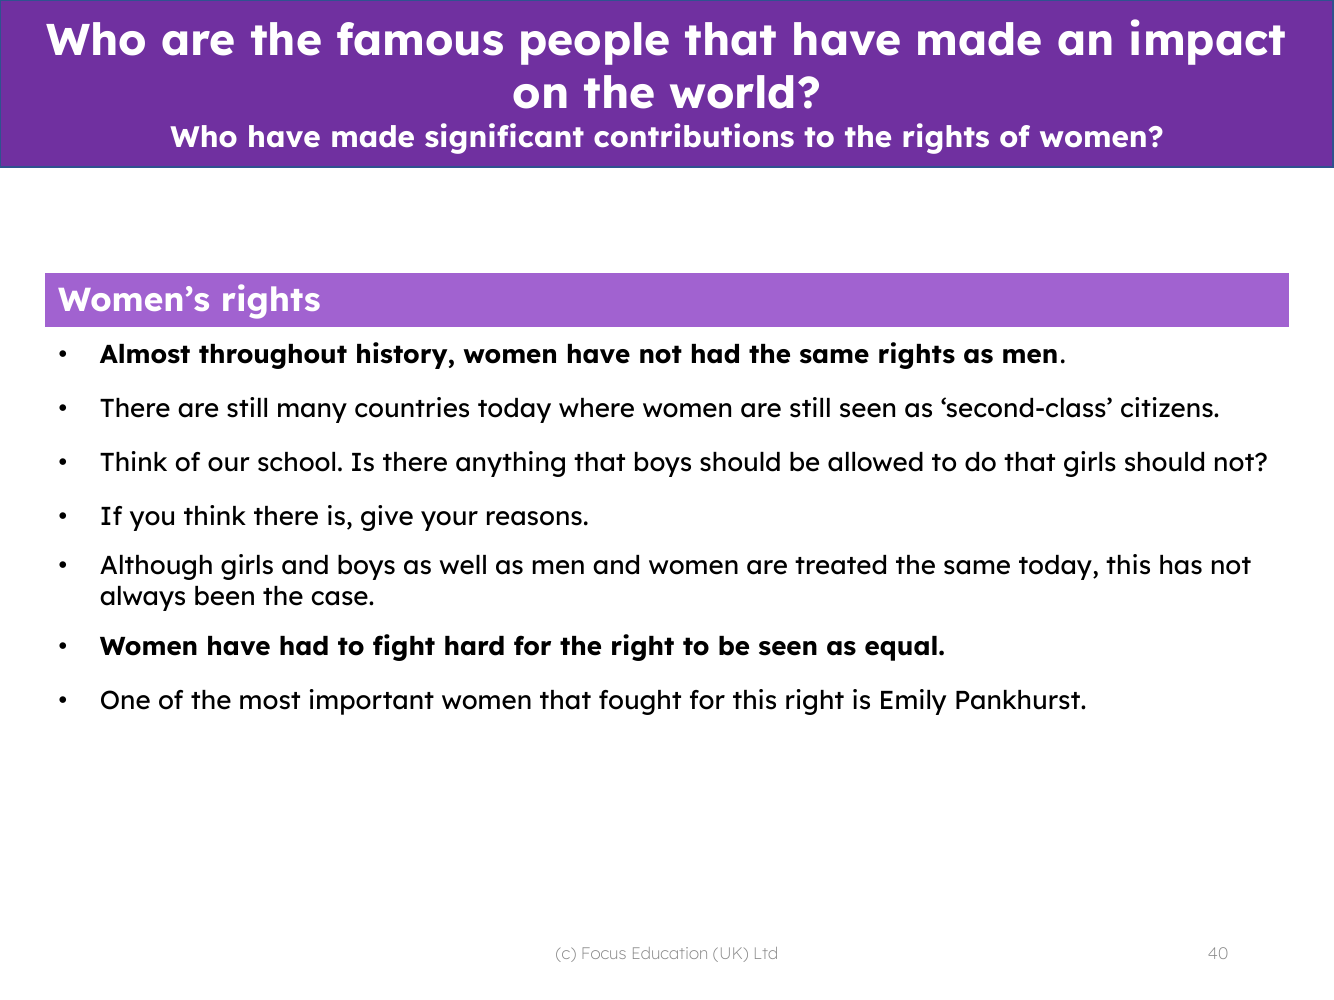 Women's rights - Info sheet